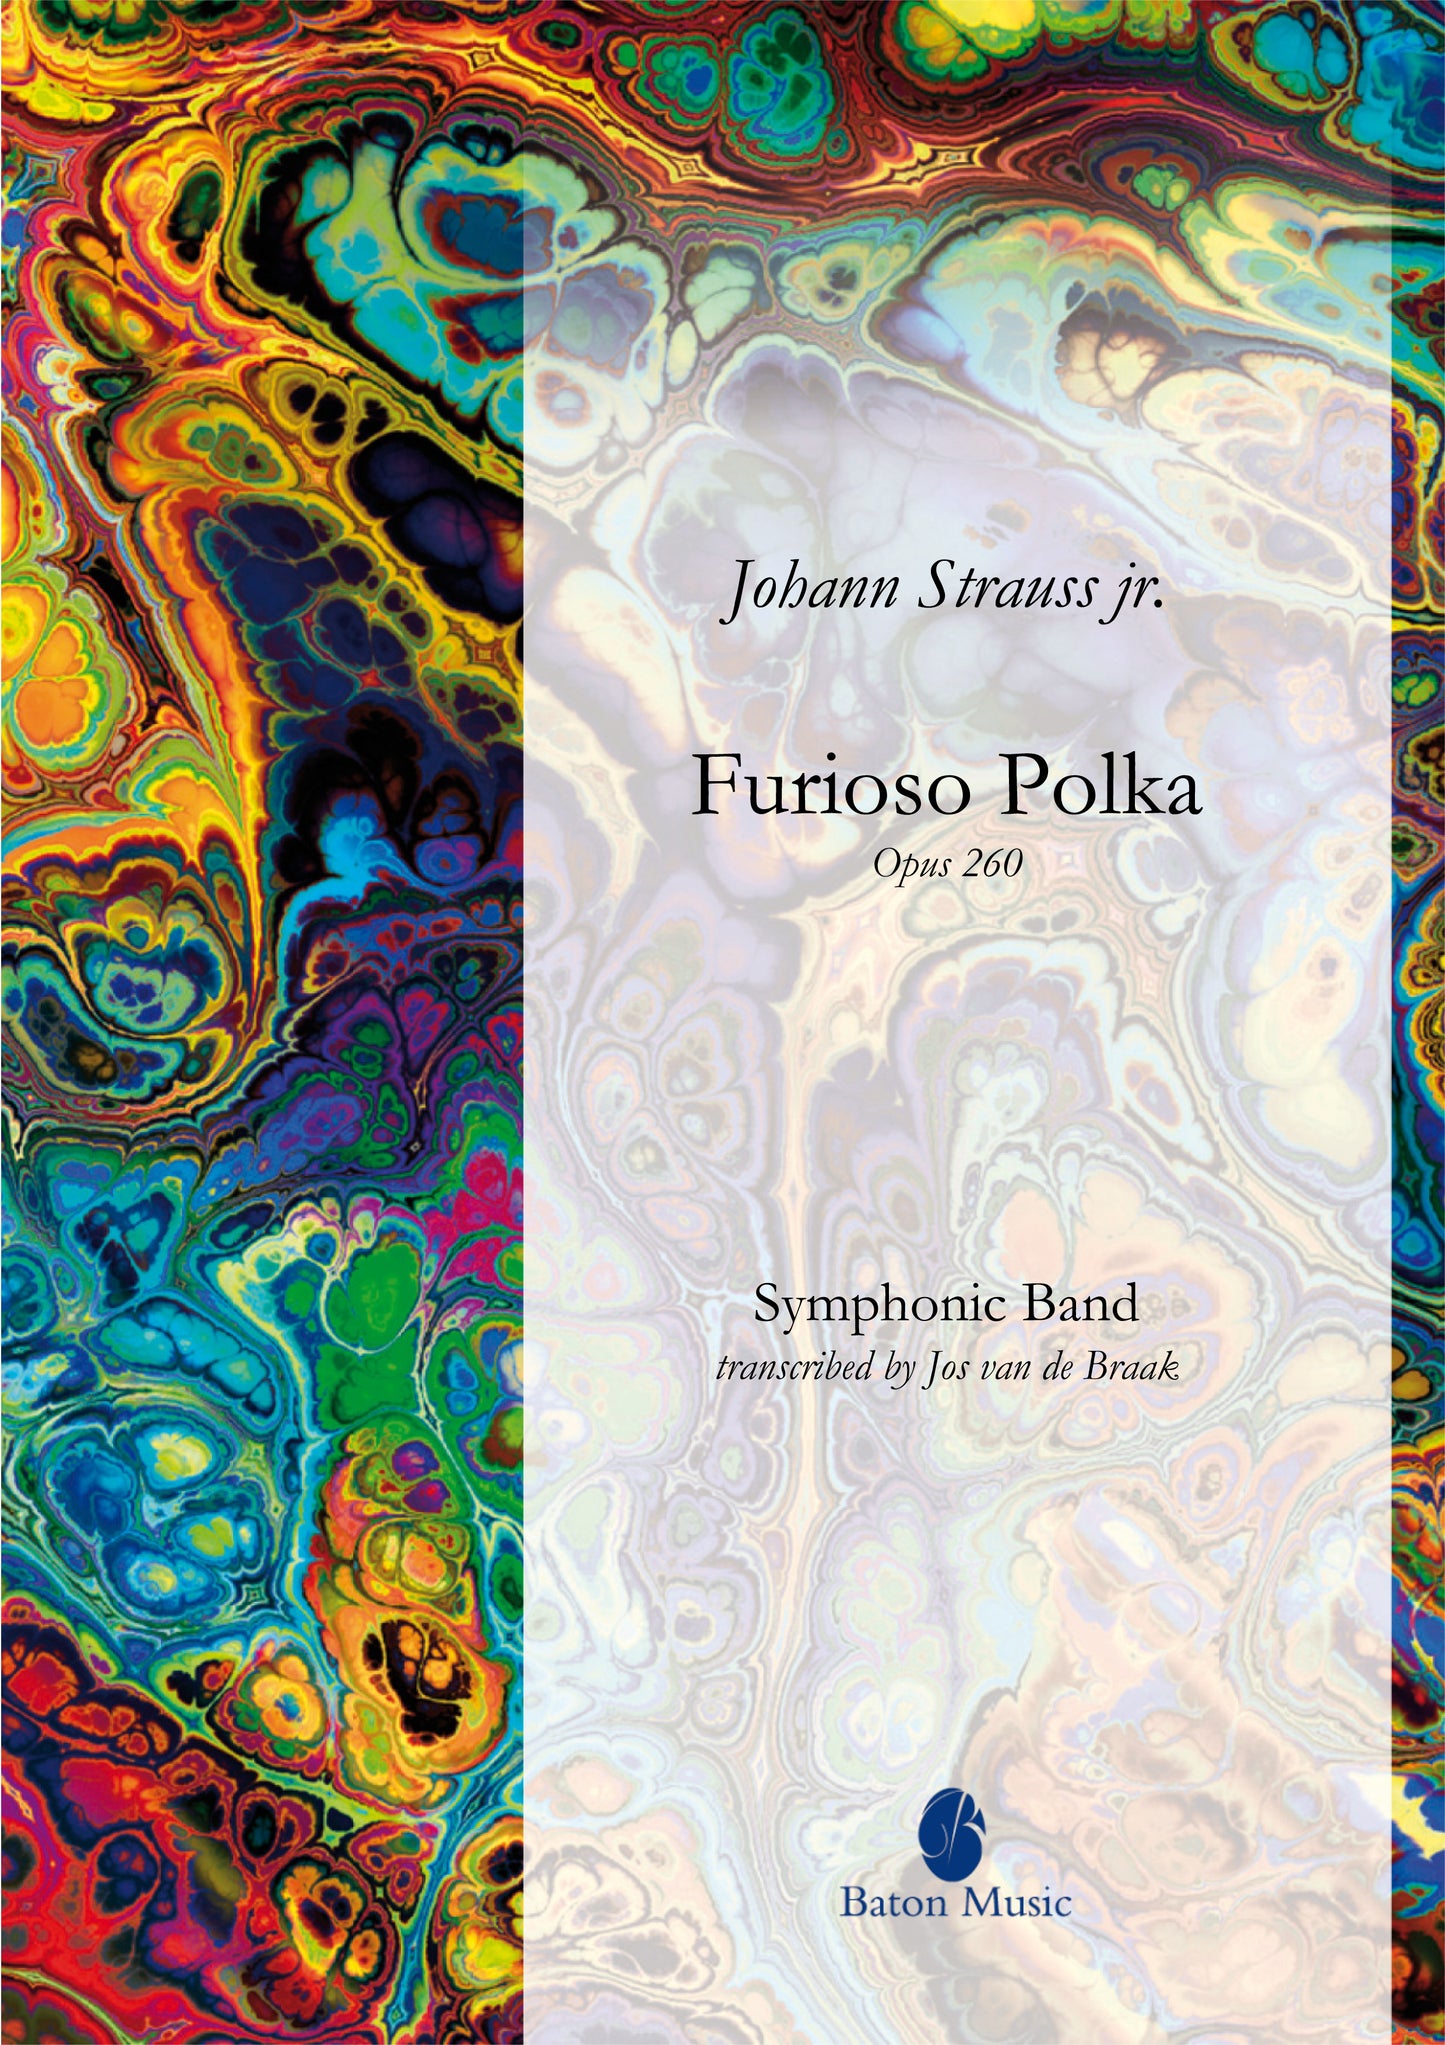 Furioso Polka - Johann Strauss